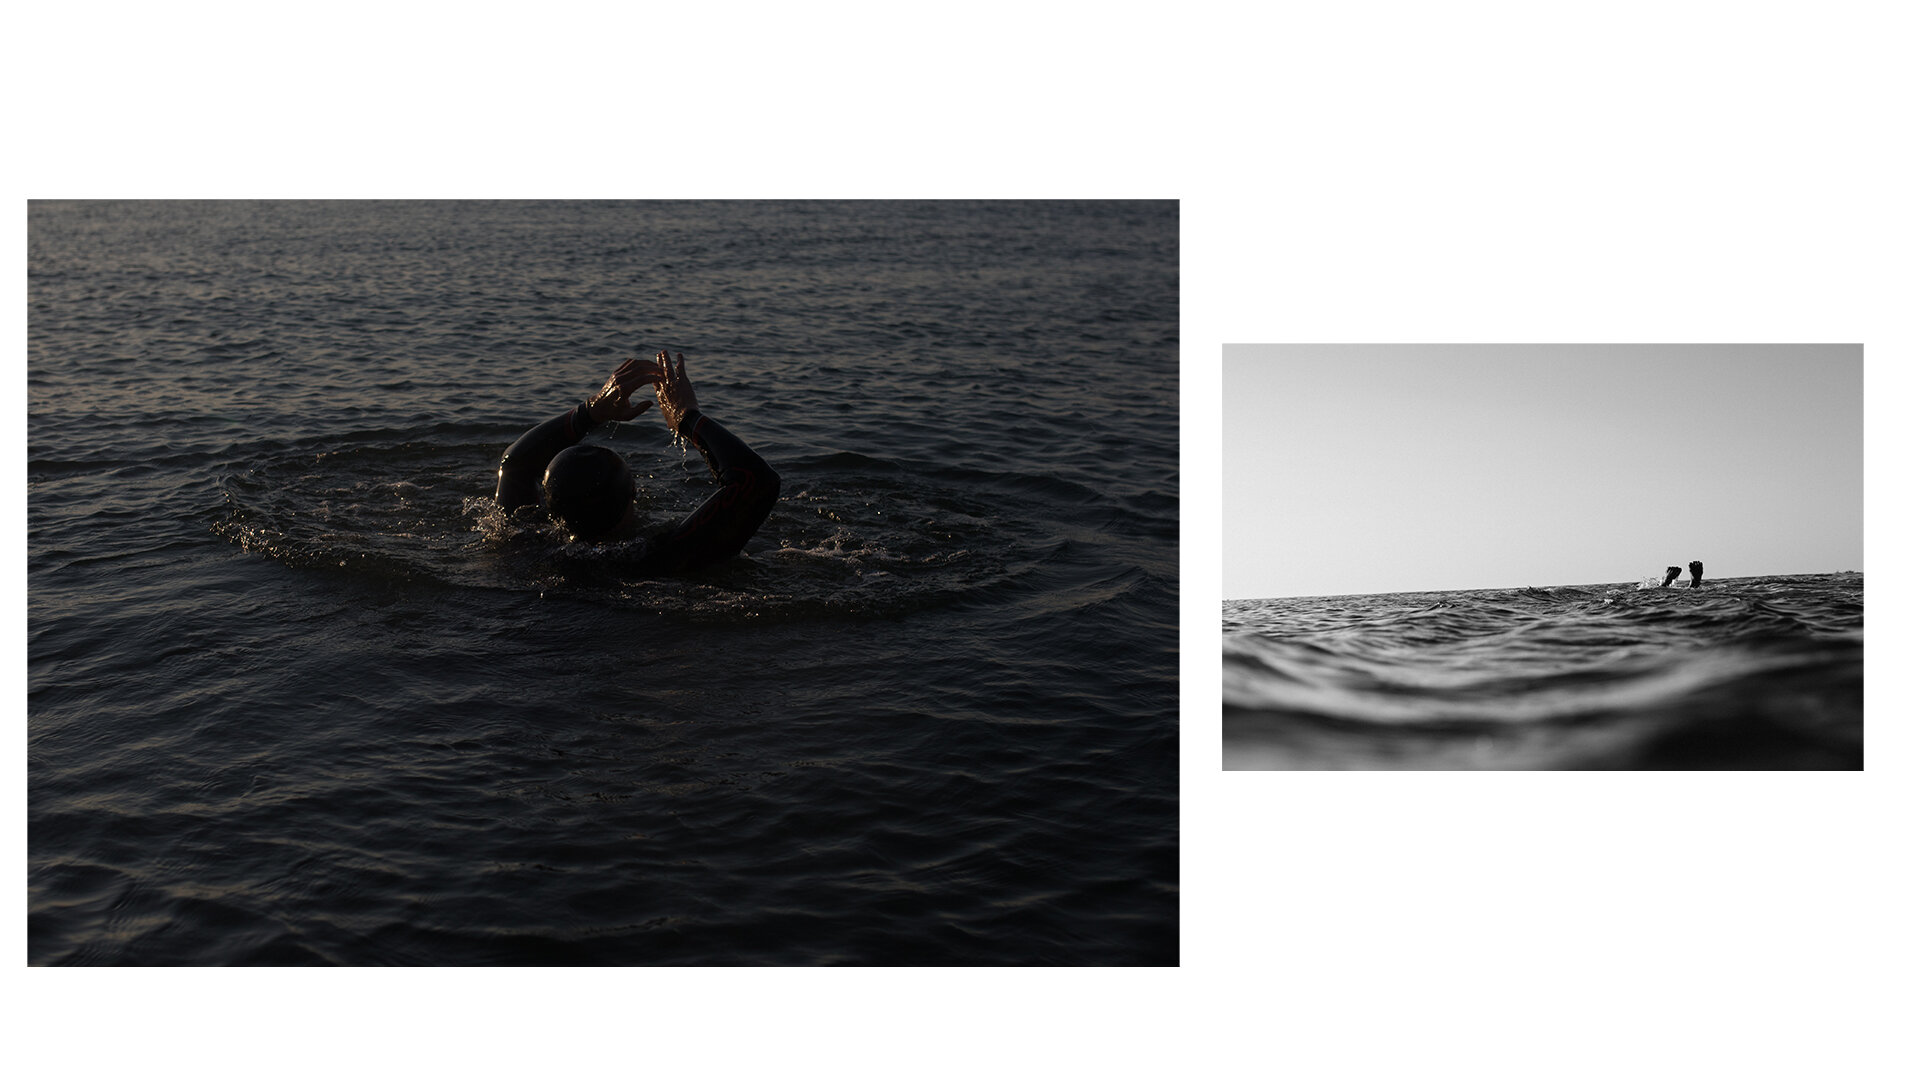 toby-butler-devon-openwaterswimming-seaswim-wildswimming-outdoors-male-tobybutlerphoto-sport-triathlon-swimming-sportphotography-lifestylephotography-open-water-swim-speedo-goggles-25.jpg